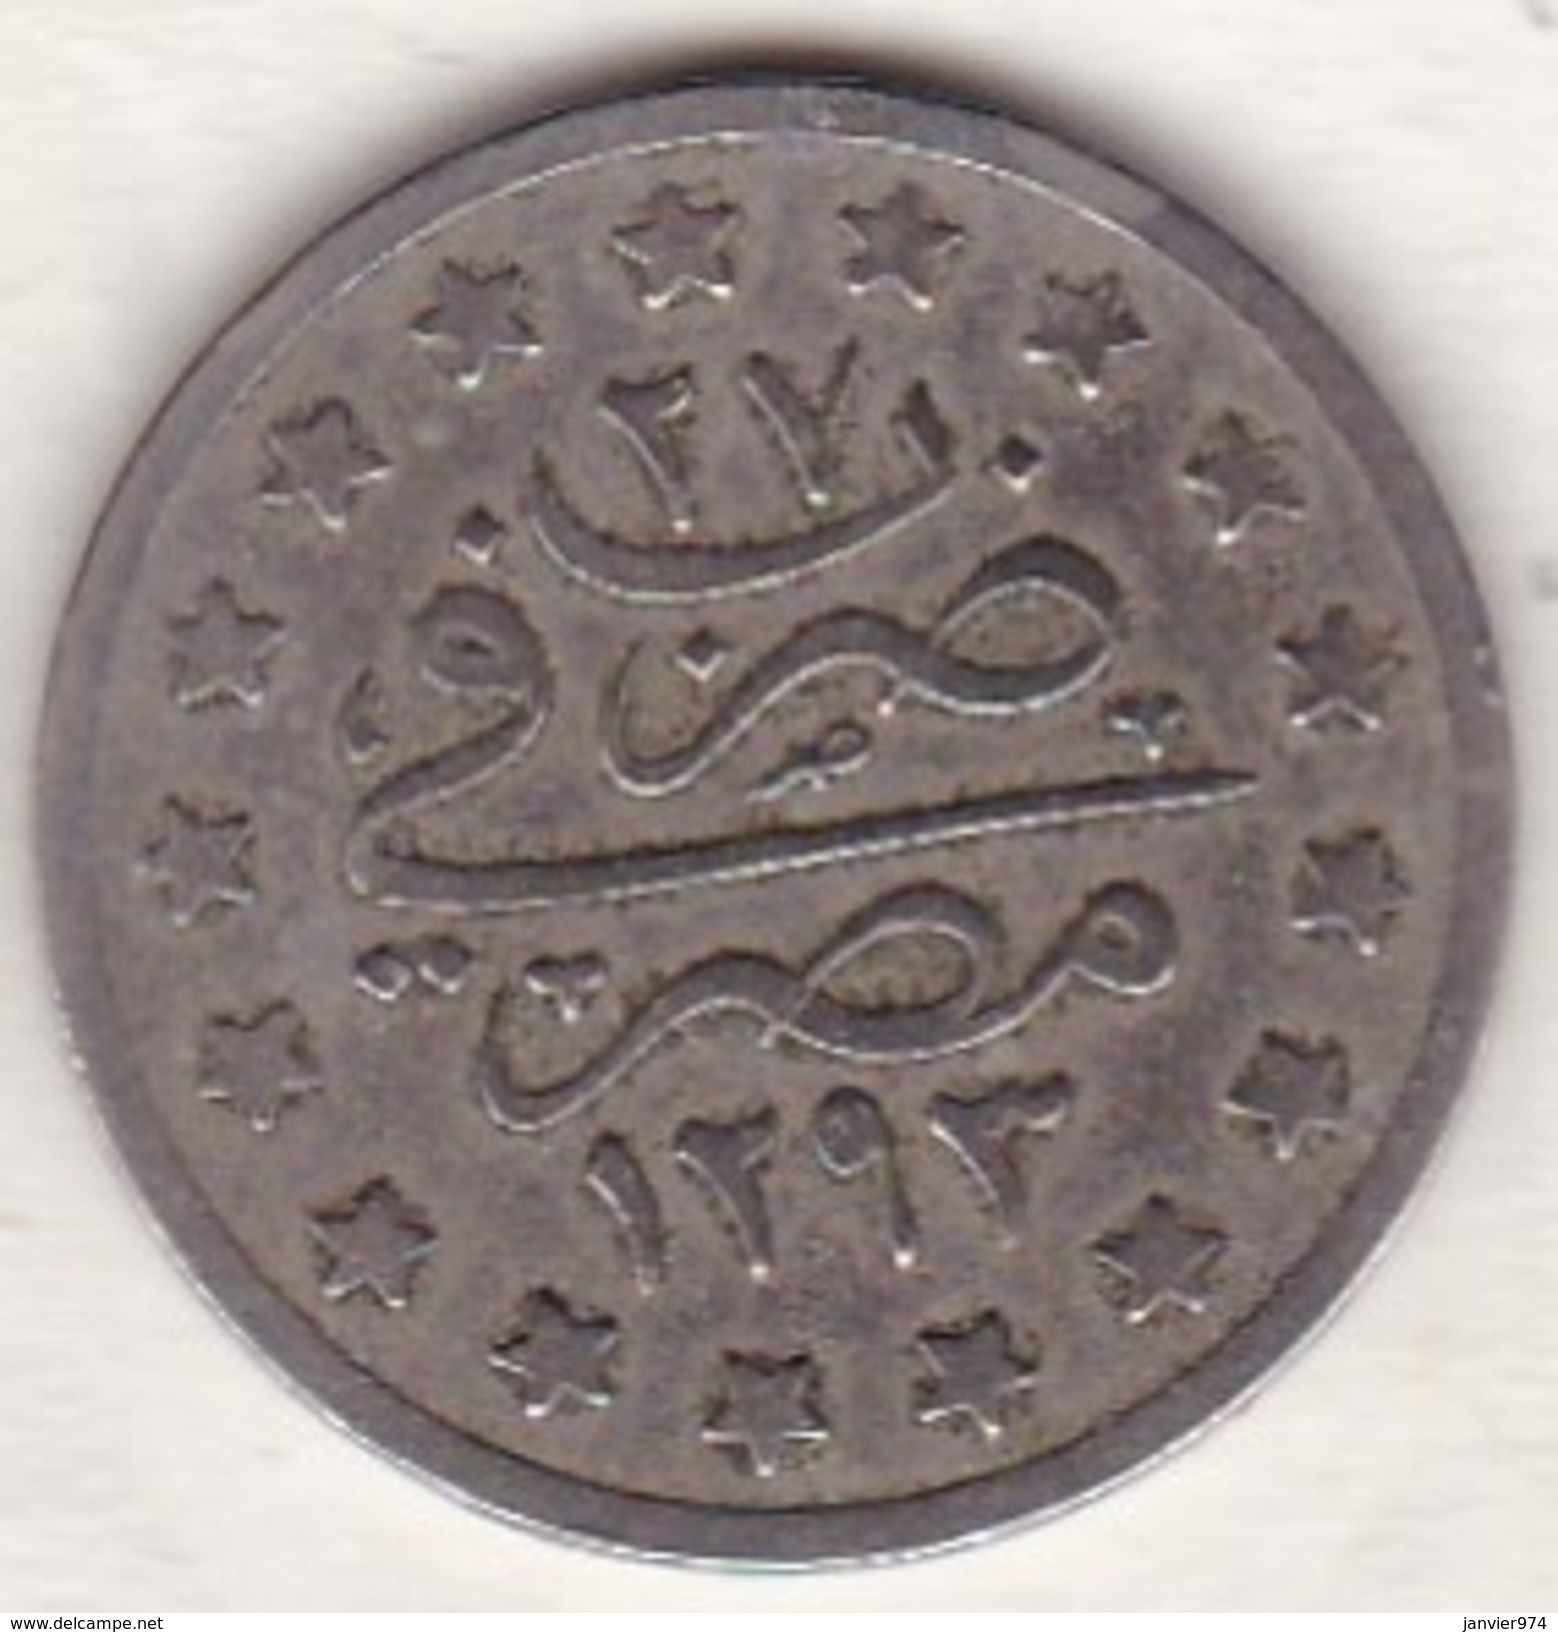 EGYPTE. 1 QIRSH AH 1293 Year 27. Copper Nickel.KM# 299. Empire Ottoman - Egypte